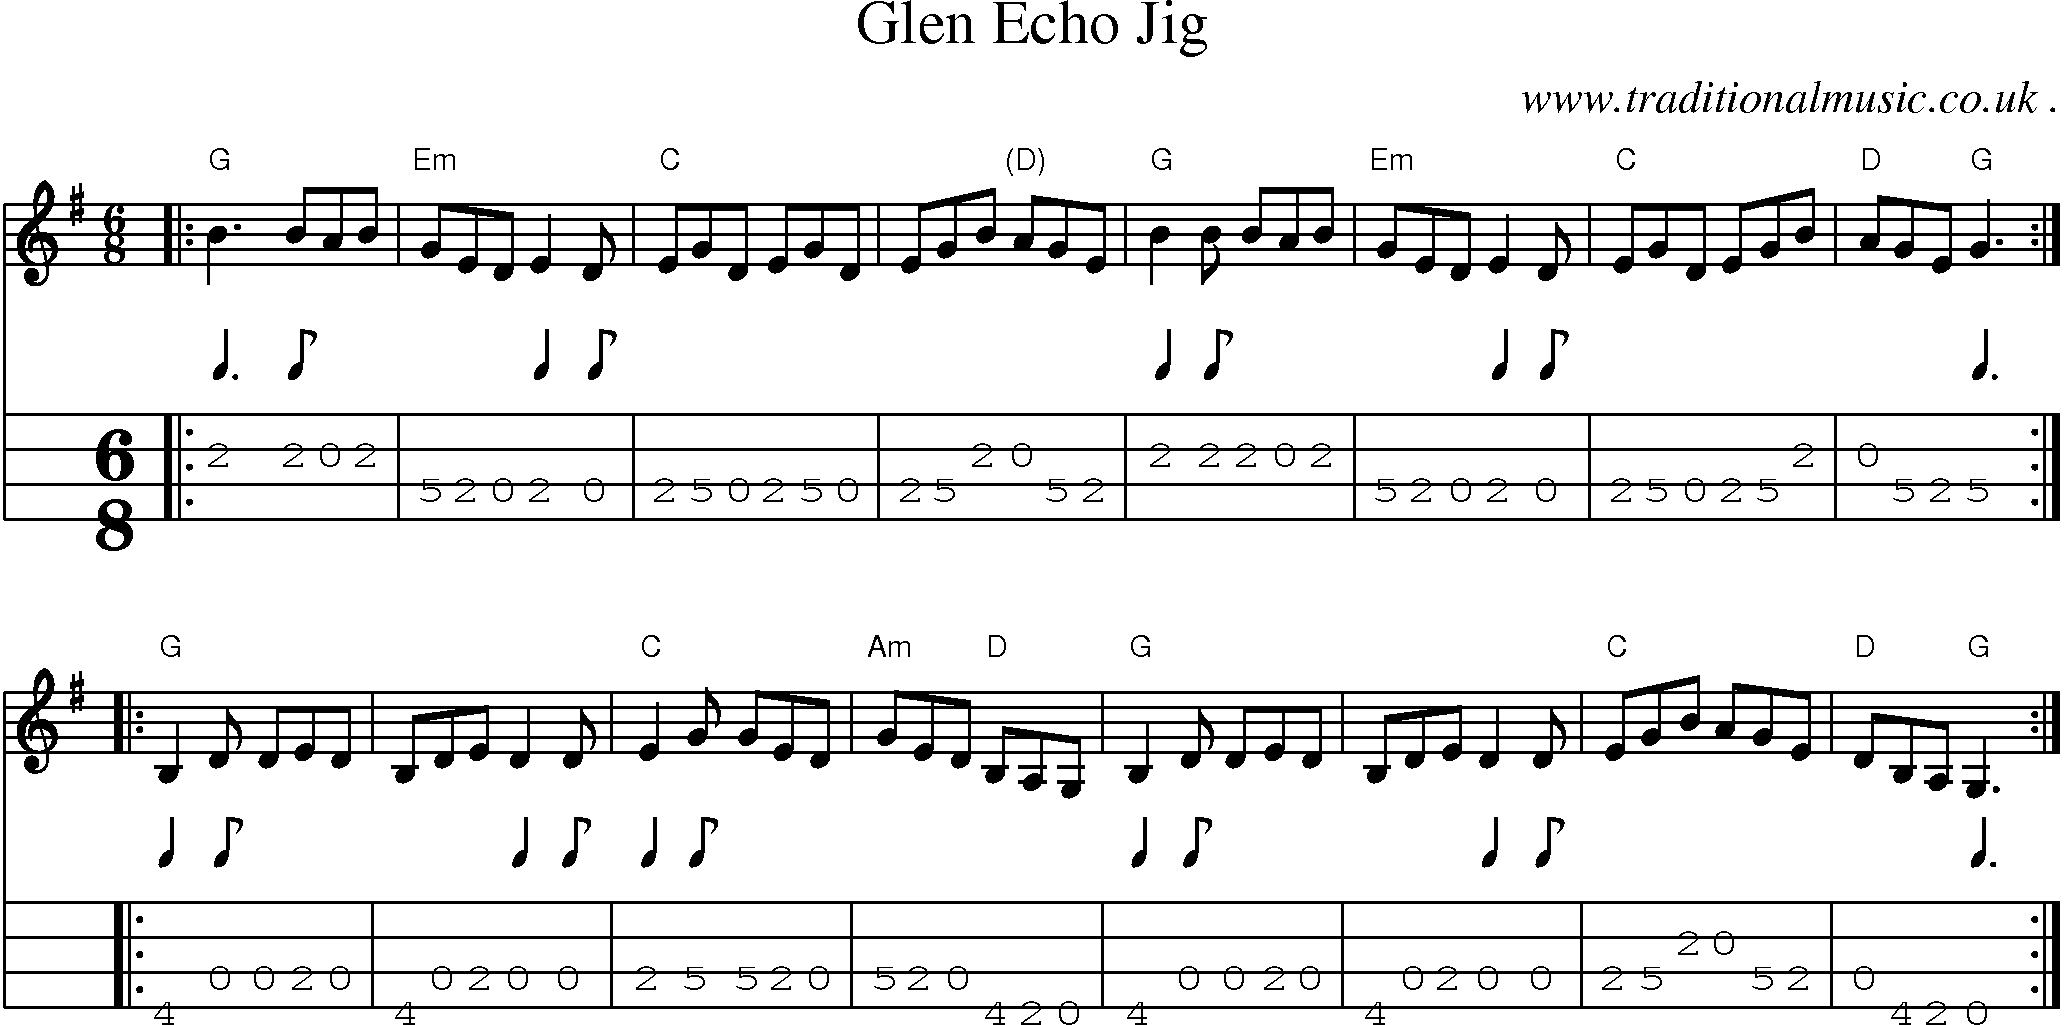 Sheet-music  score, Chords and Mandolin Tabs for Glen Echo Jig